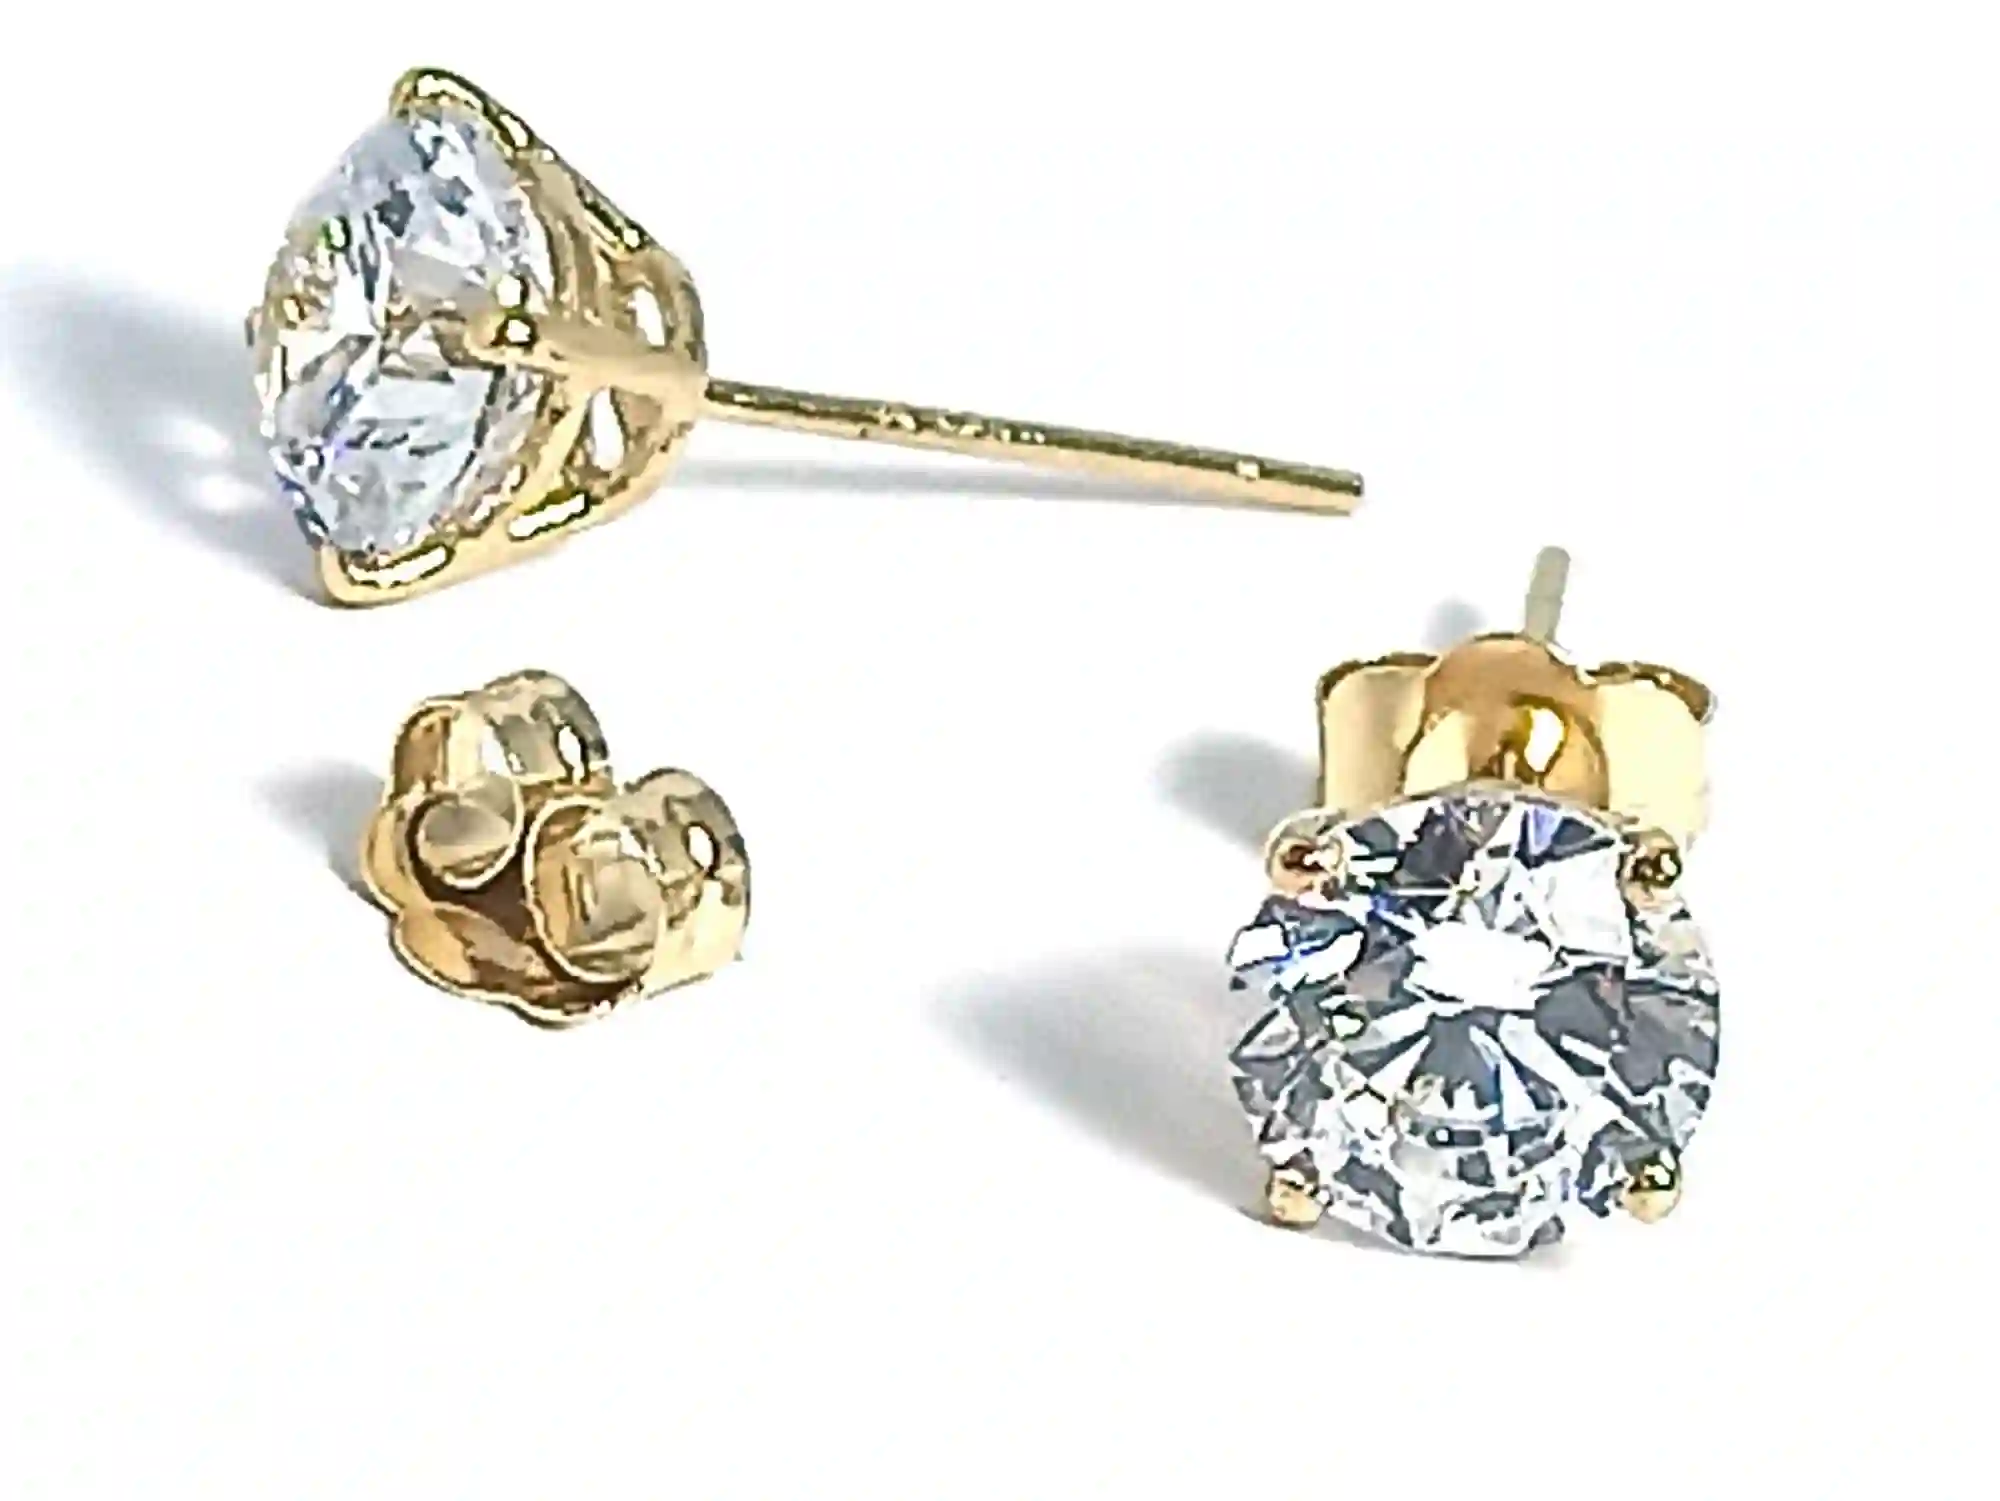 SOLID 18k GOLD Solitaire DIAMOND Earrings 2 carat Diamond Stud Earrings Yellow Gold Wife Earrings Gift for Her Luxury Diamond Earstud 6.5mm 